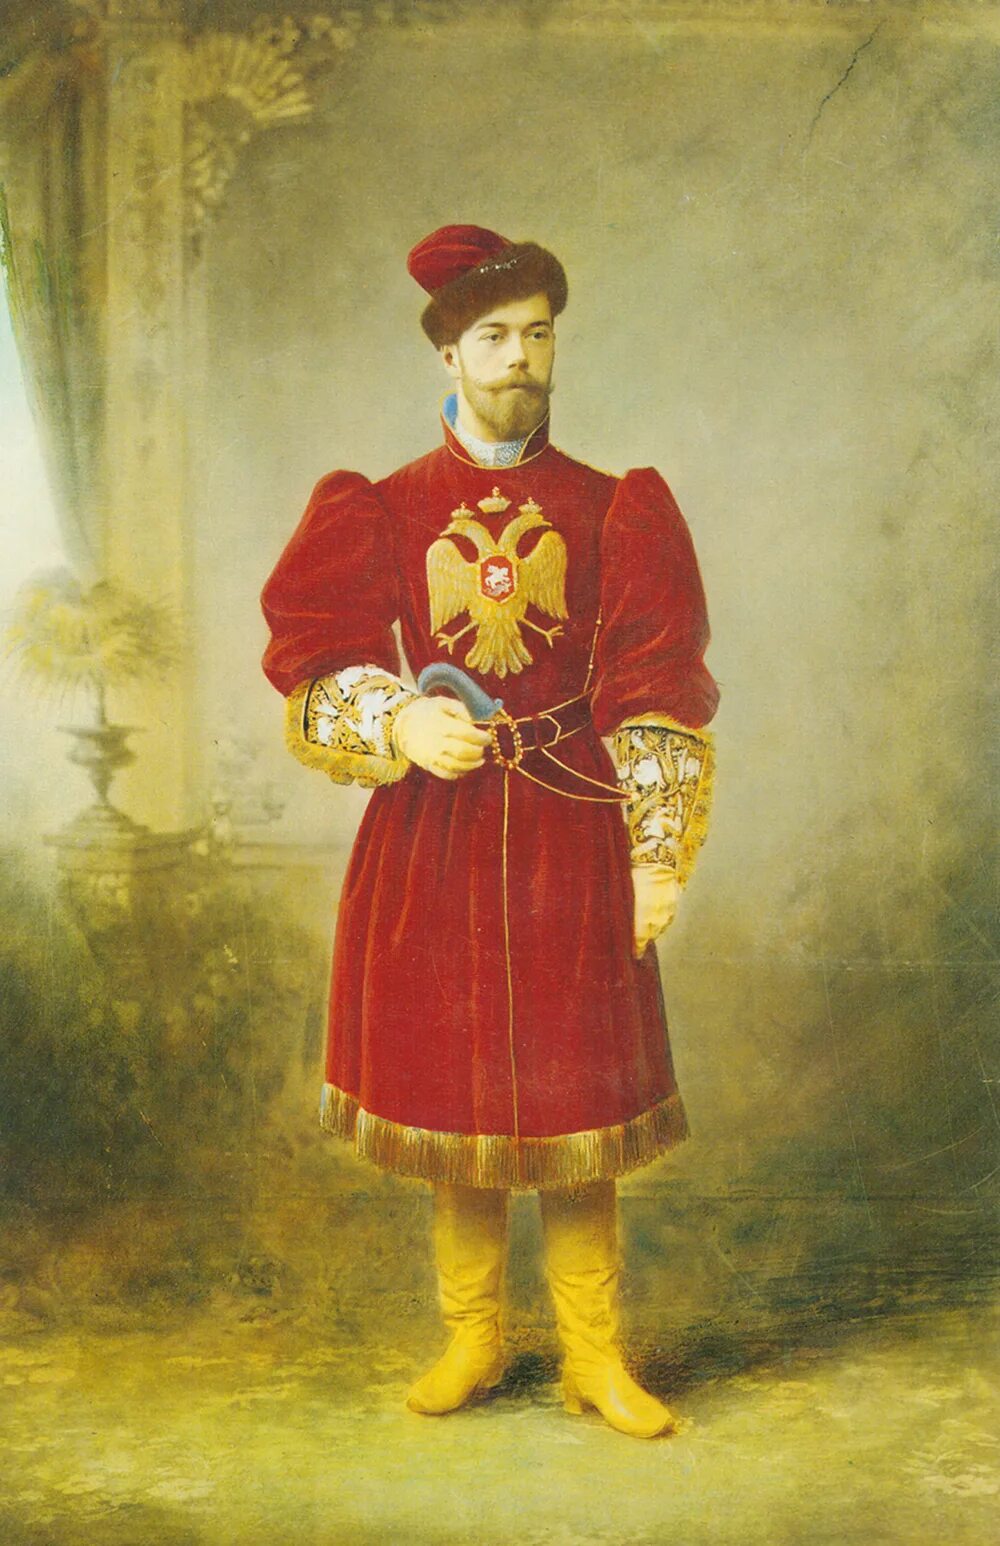 Царские одежды 5 букв. Одежда императора Николая 2. Одежда Николая 2. Кафтан царя.